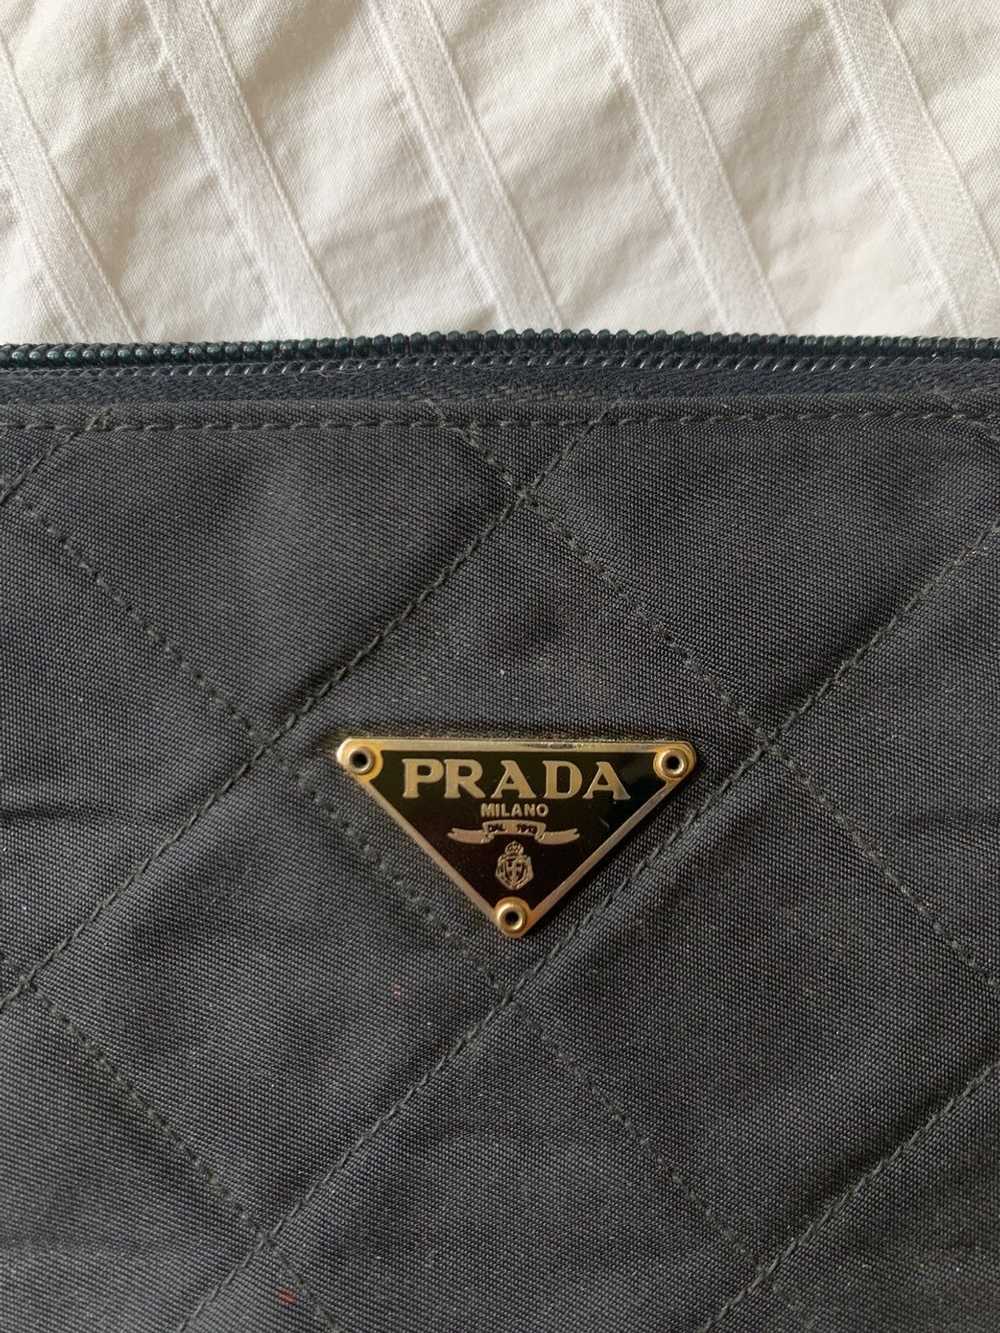 Prada Vintage Prada Wallet - image 5